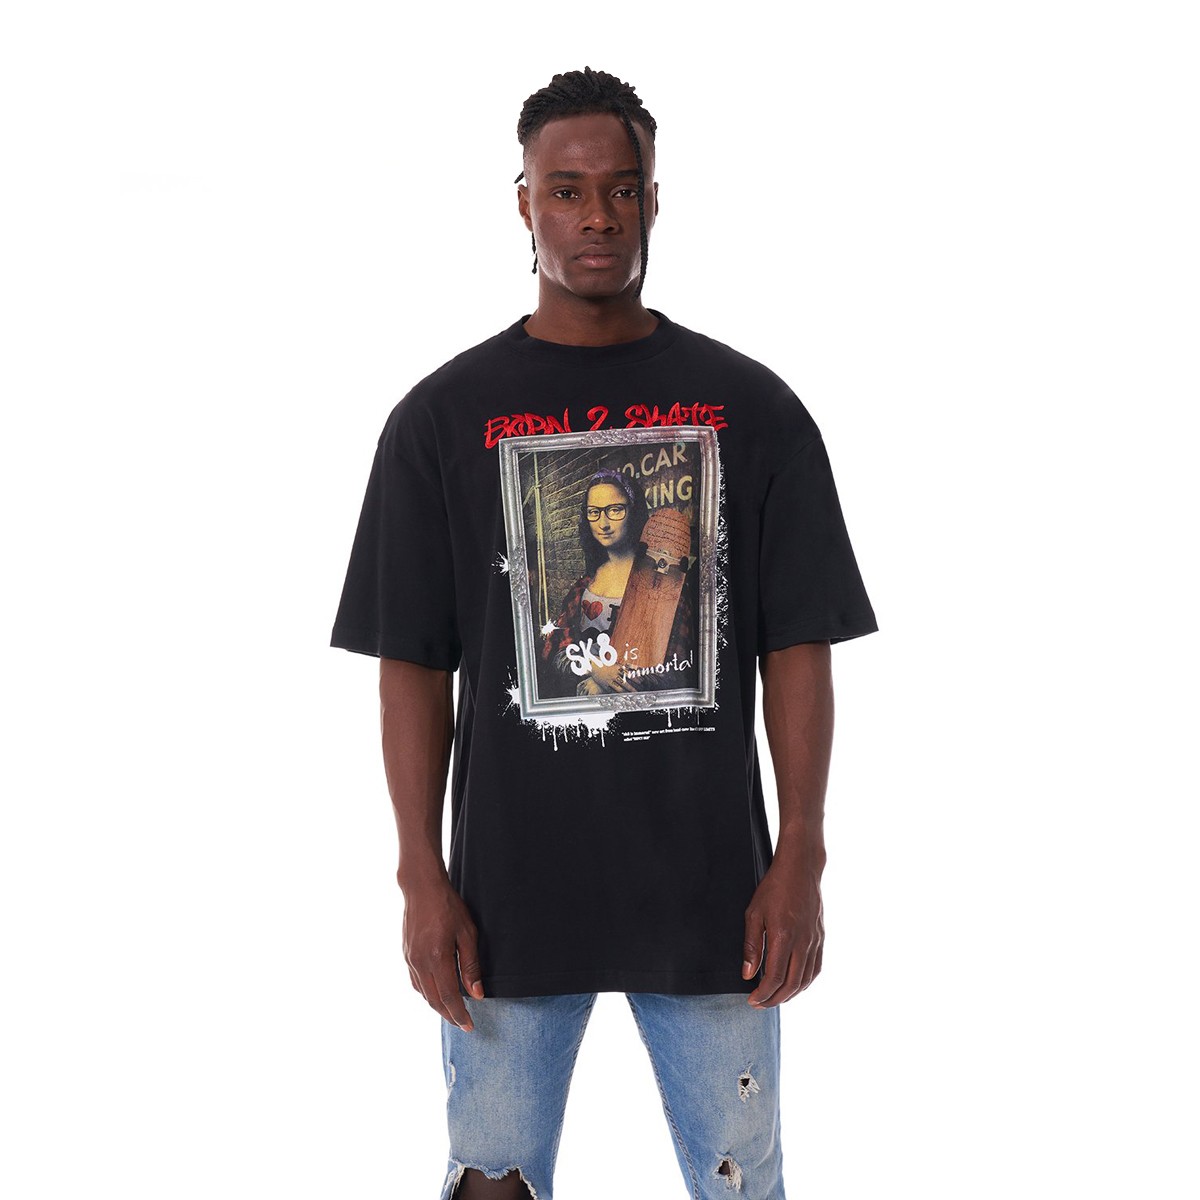 Ghetto Off Limits Born 2 Skate Black Oversize T-Shirt TS-20004